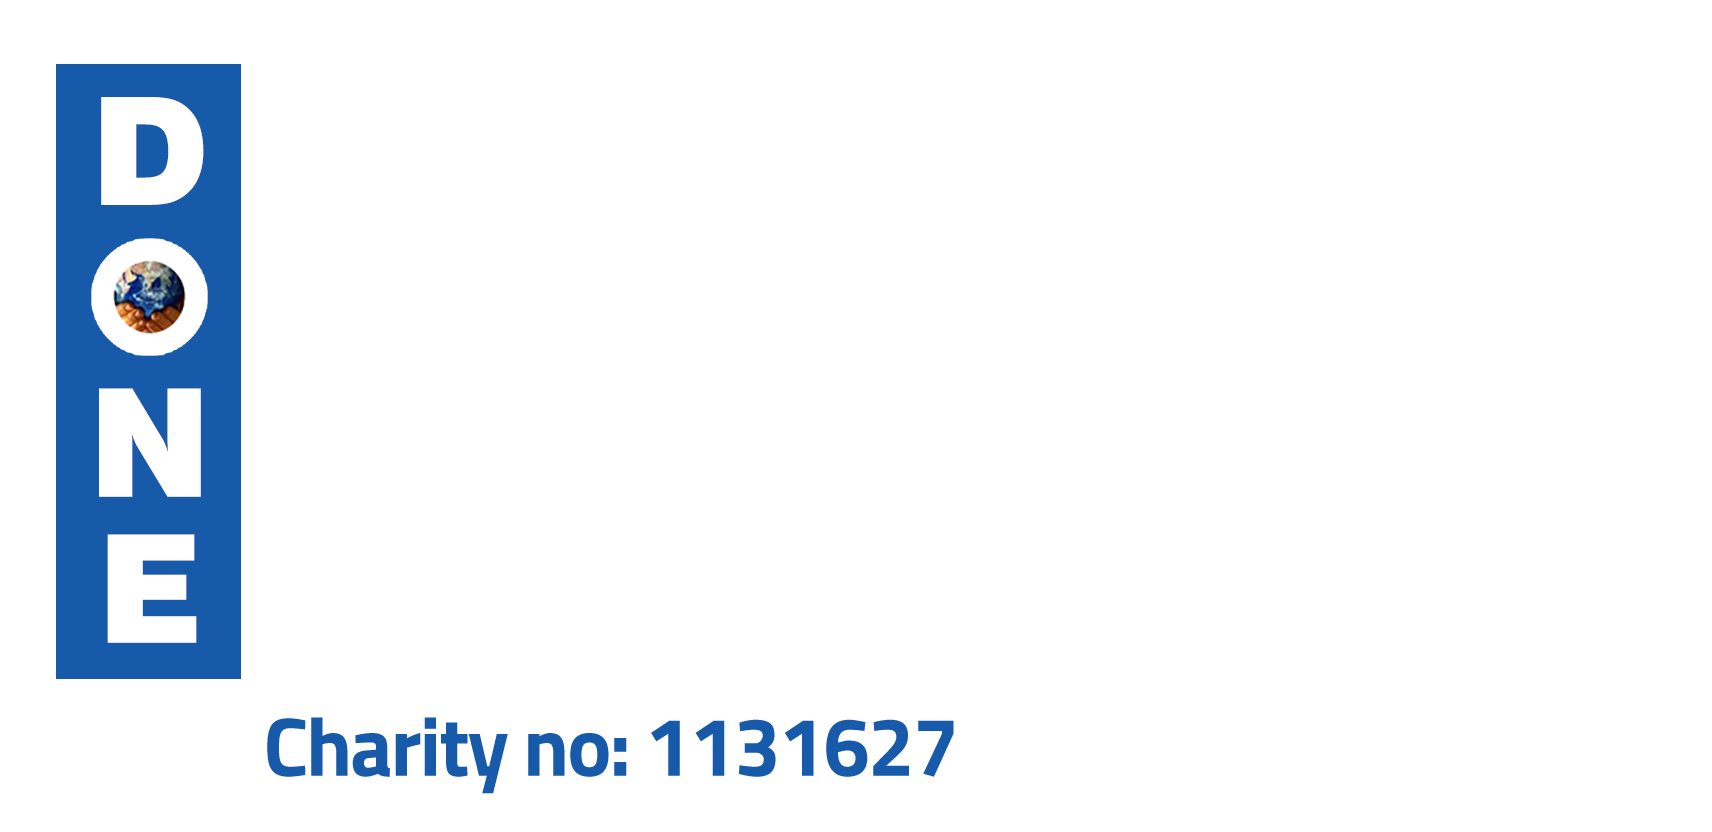 Development Of Nations Economy